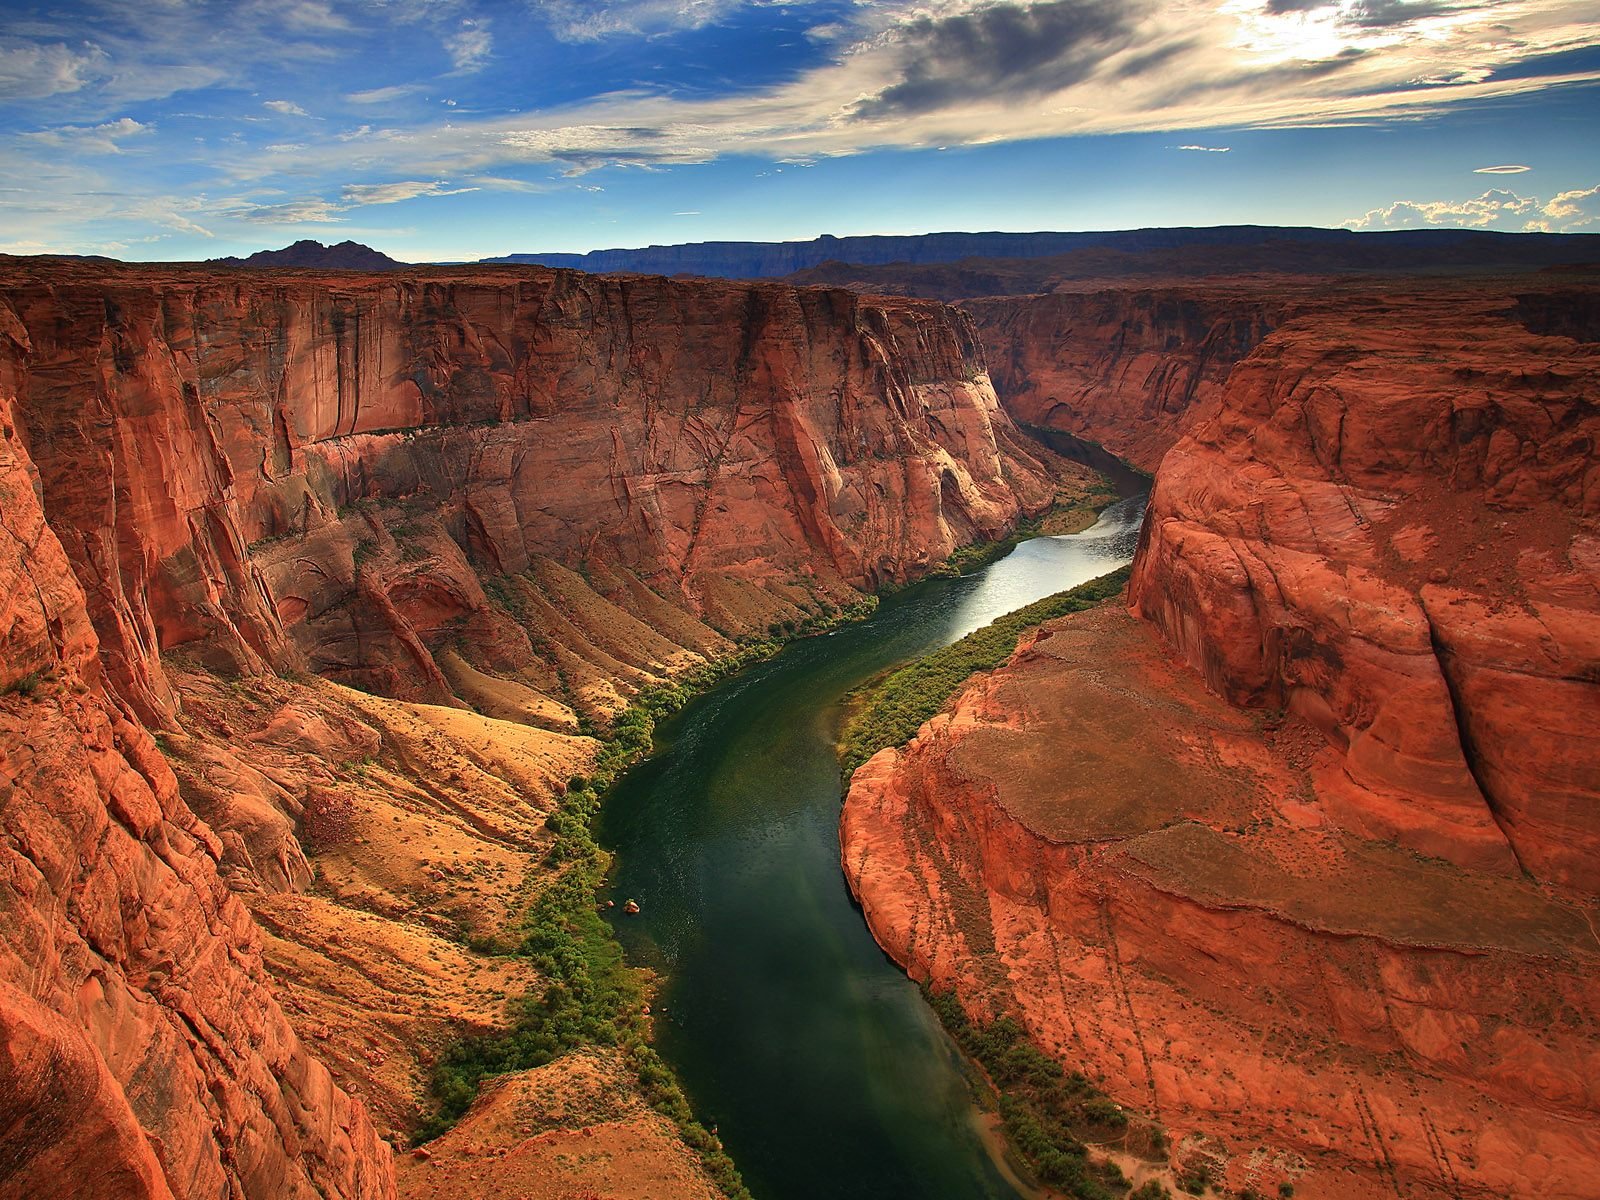  Colorado River Page Arizona   Arizona Photography Desktop Wallpapers